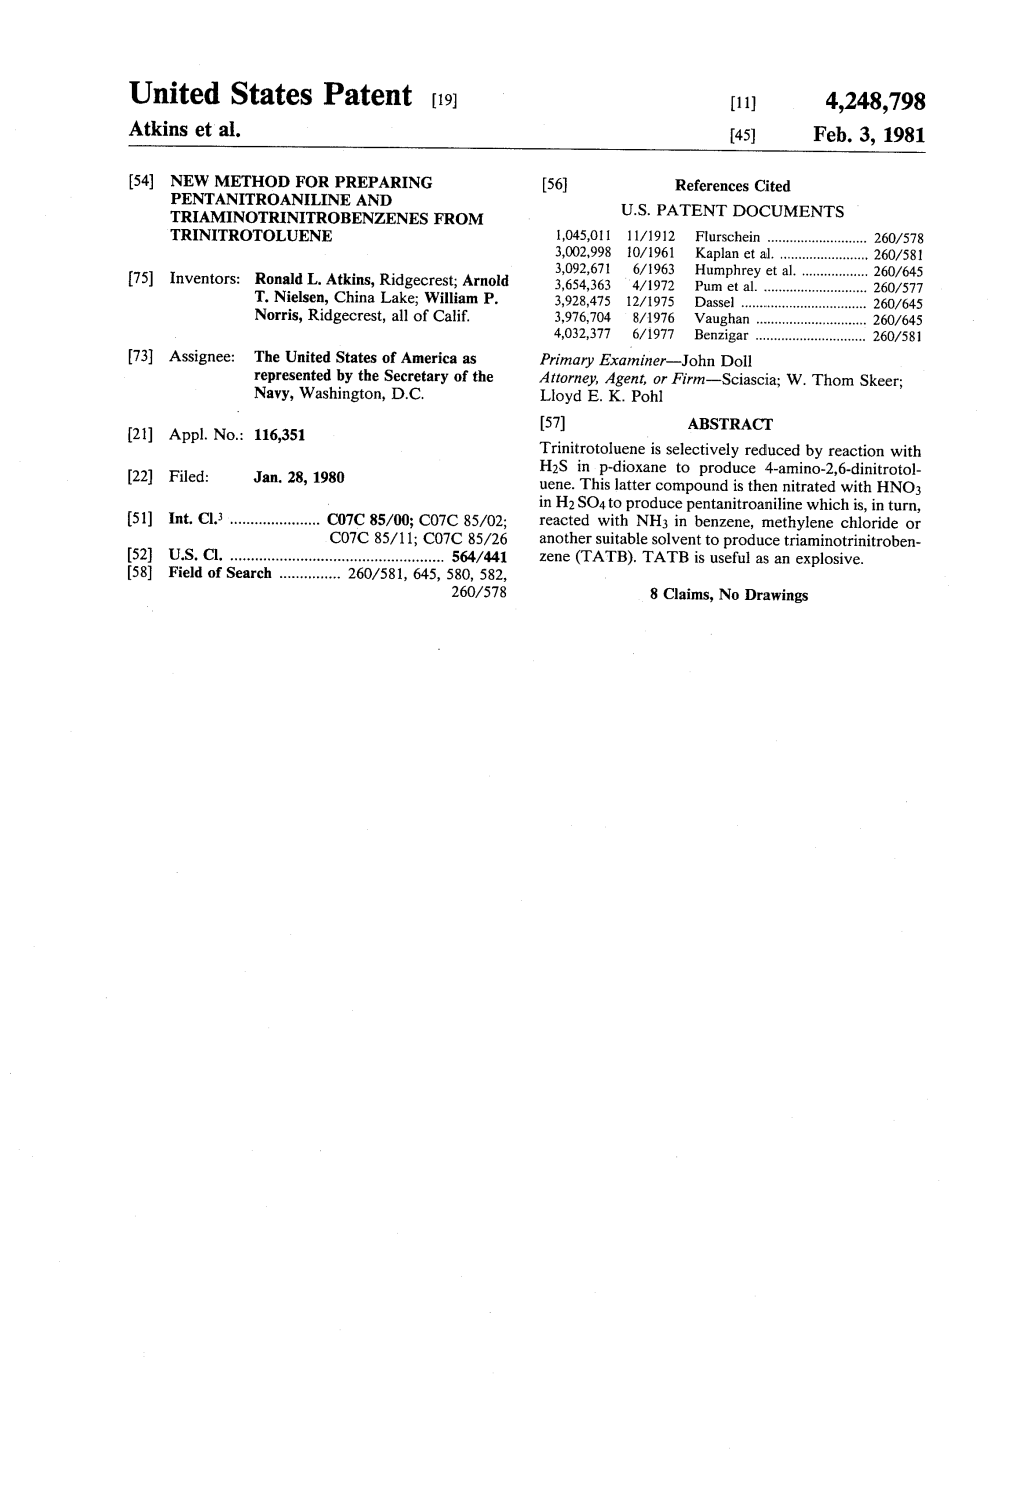 United States Patent (19) 11) 4,248,798 Atkins Et Al